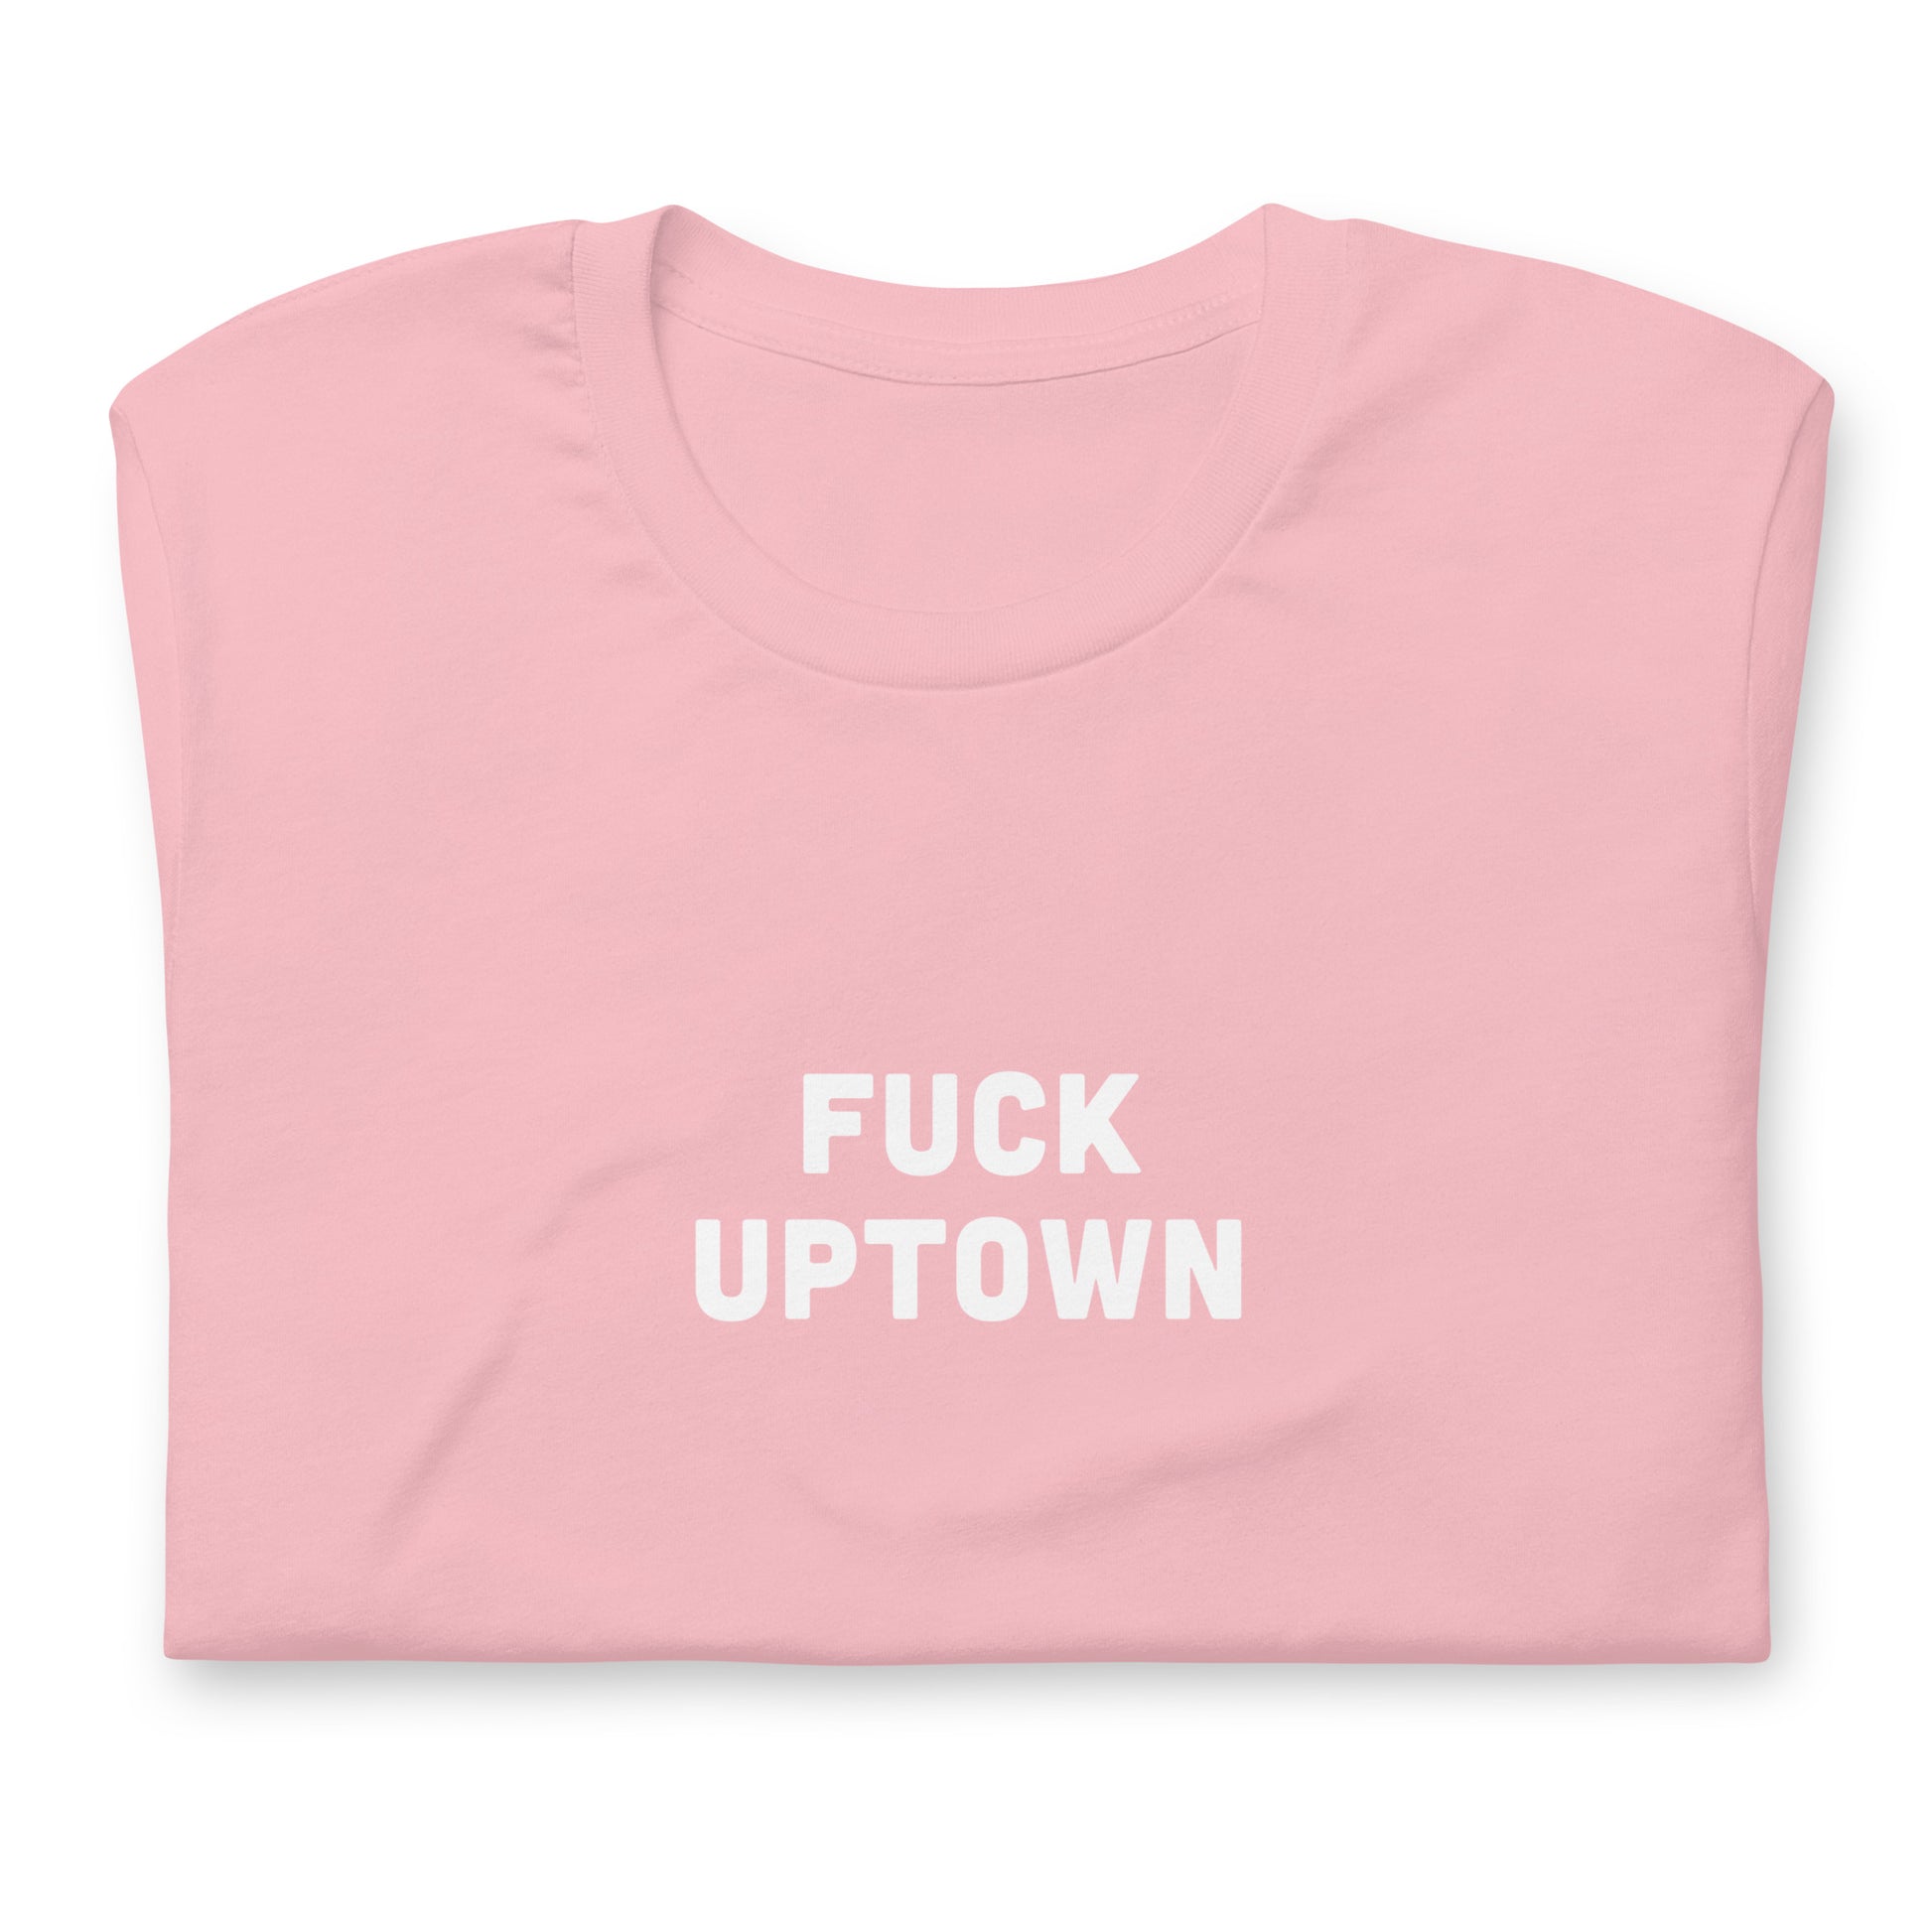 Fuck Uptown T-Shirt Size S Color Asphalt